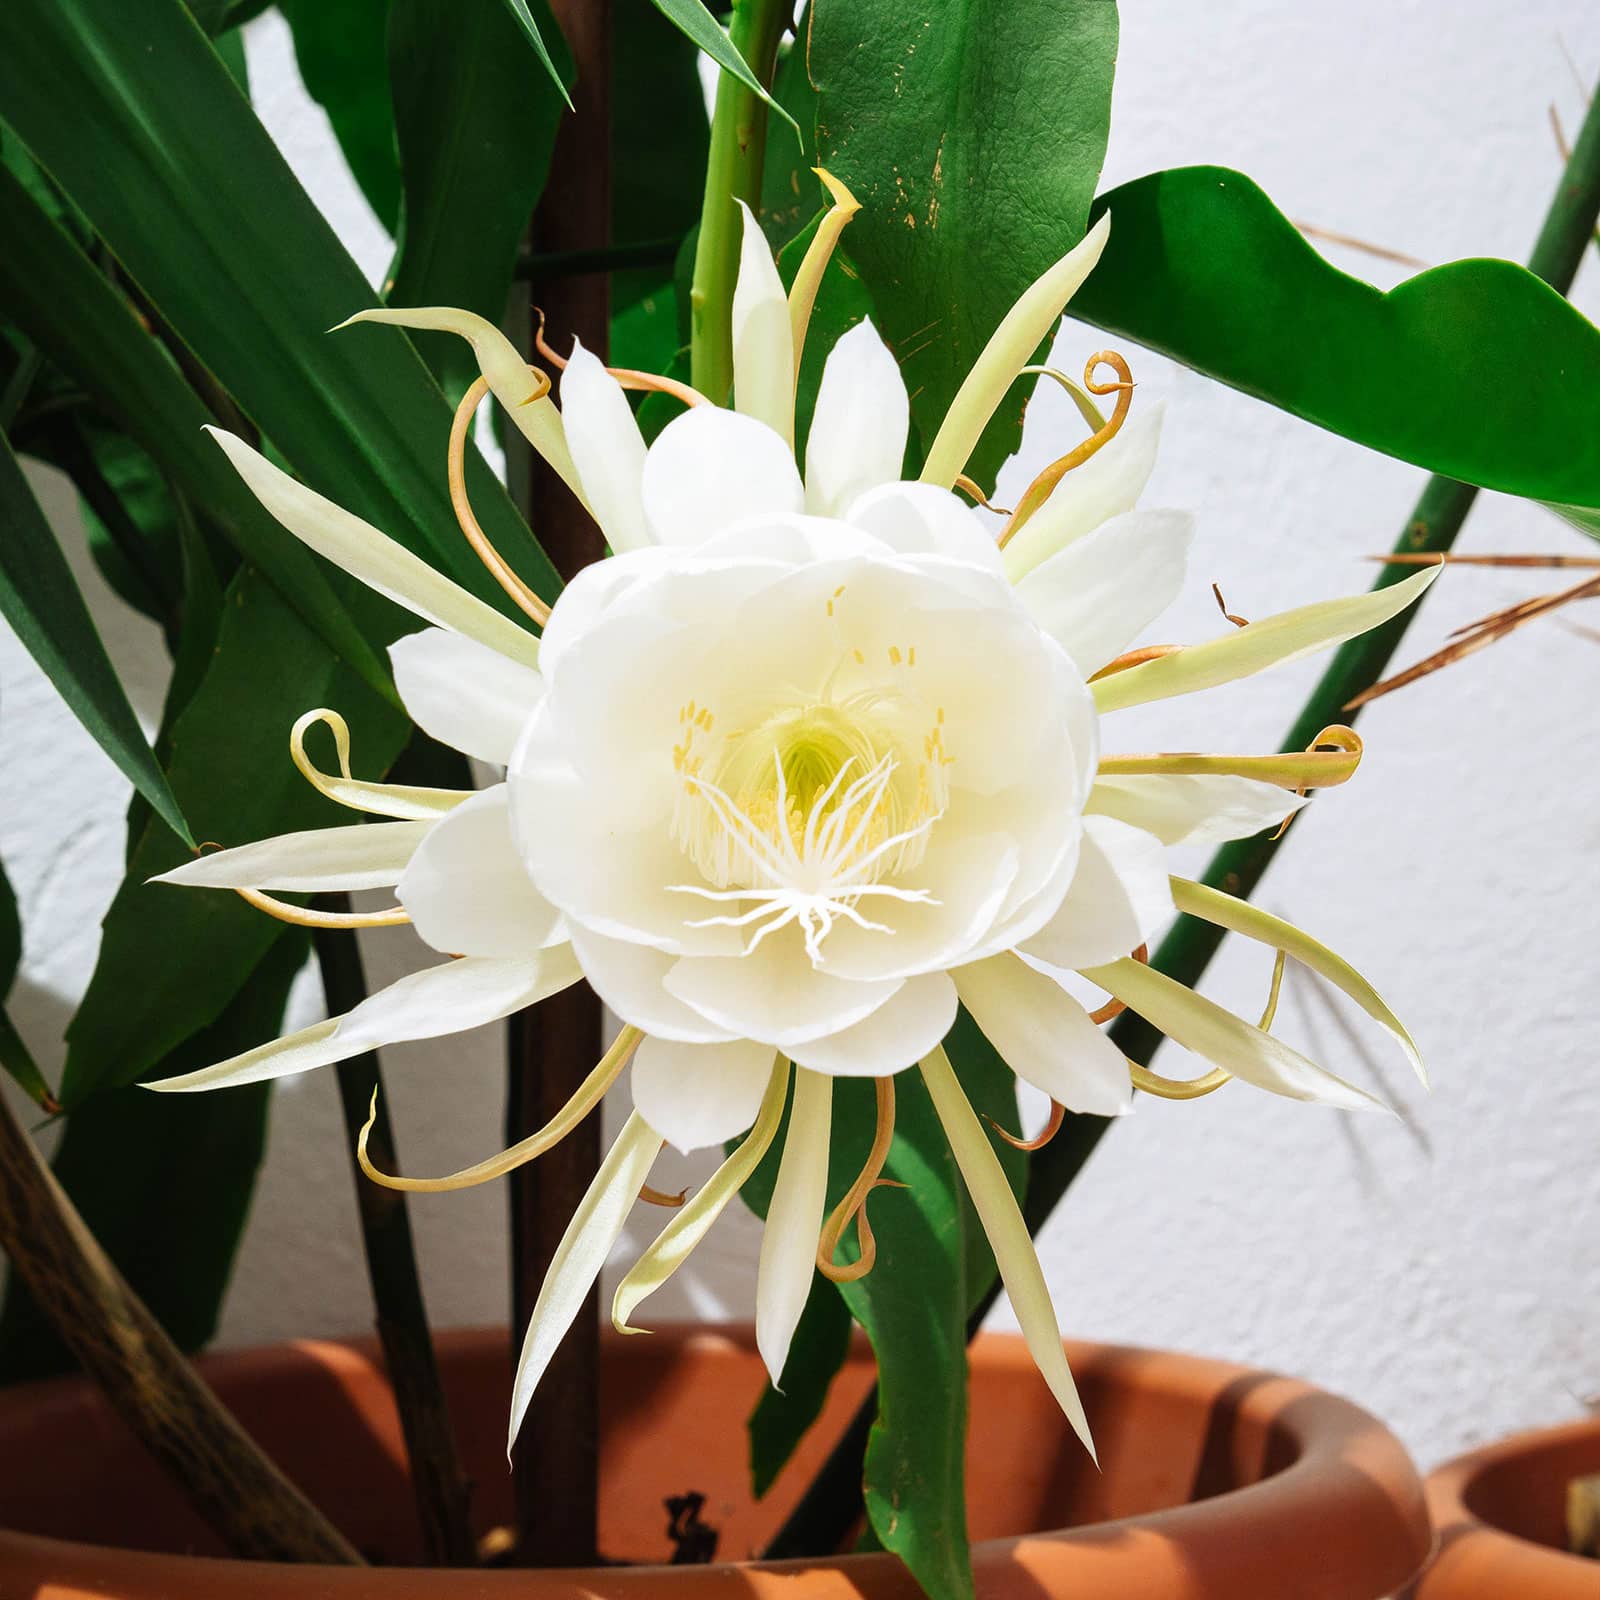 Epiphyllum oxypetalum (orchid cactus) with creamy white flower